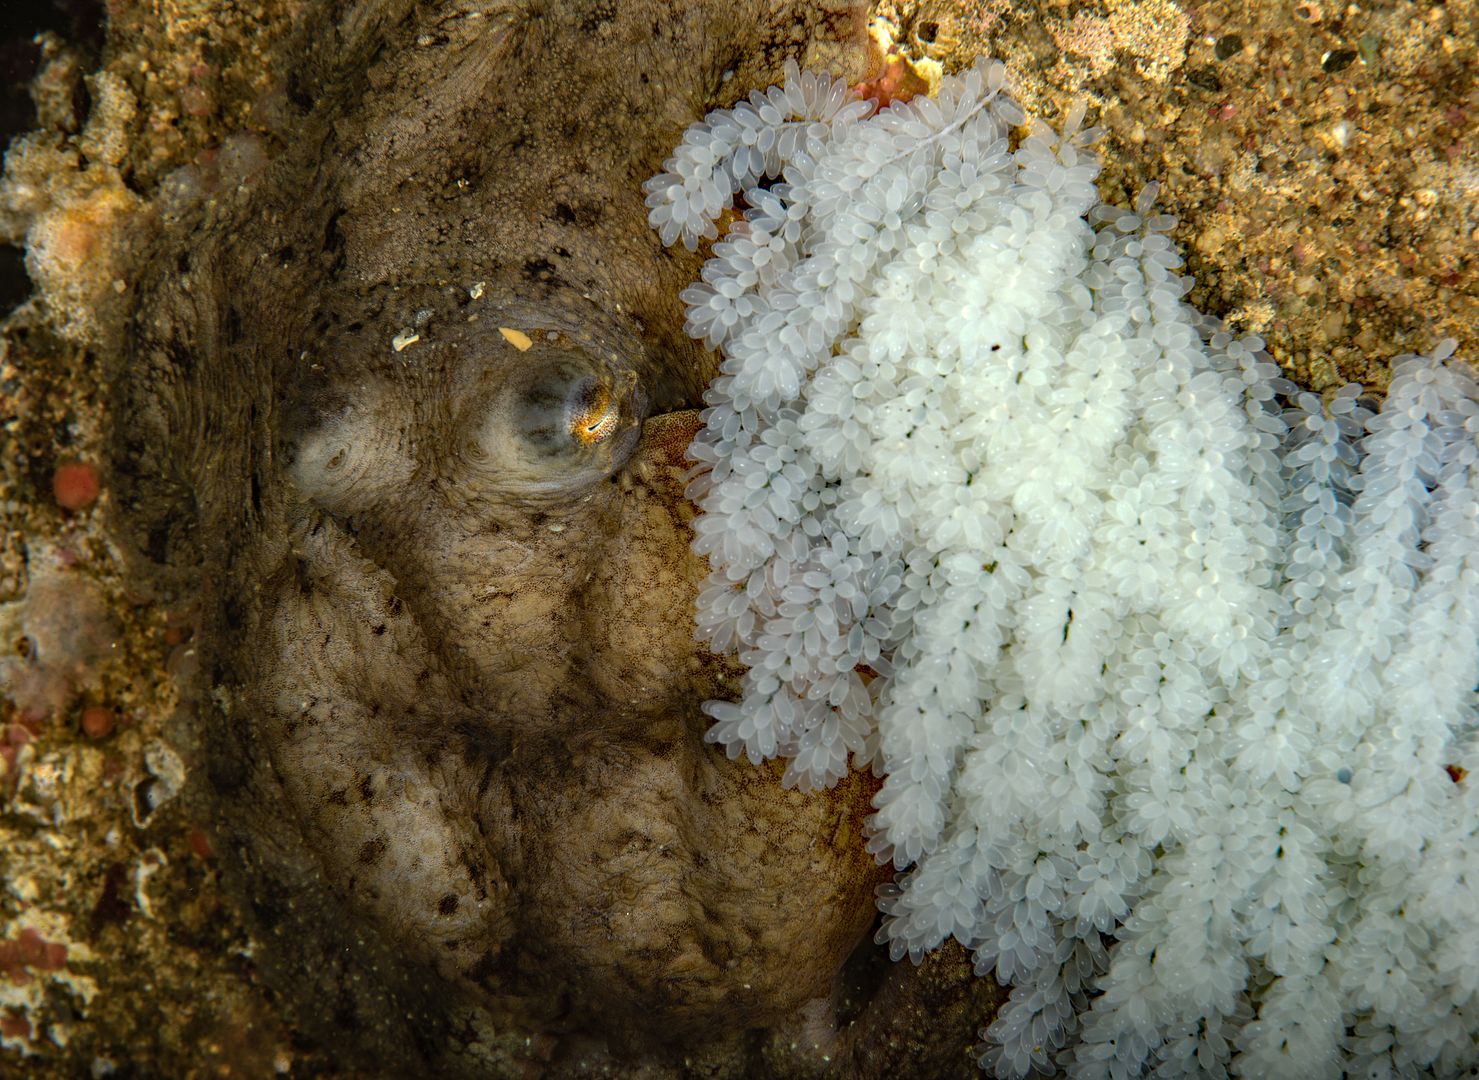  photo Octopus rubescens nest_zps42tta44k.jpg